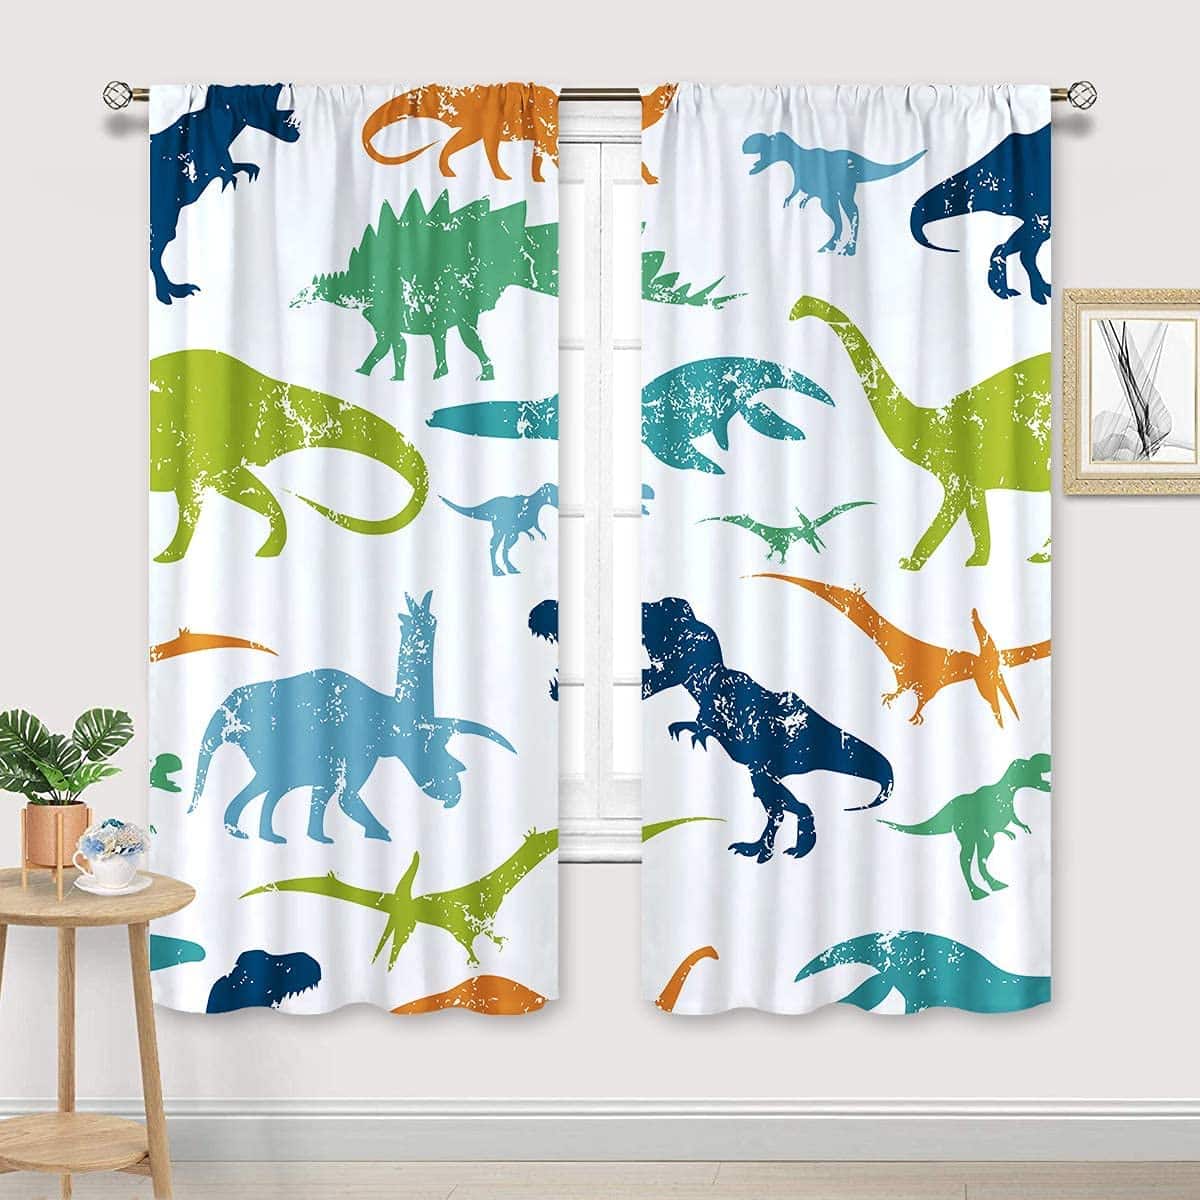 dinosaur-themed-bedroom-ideas-curtains